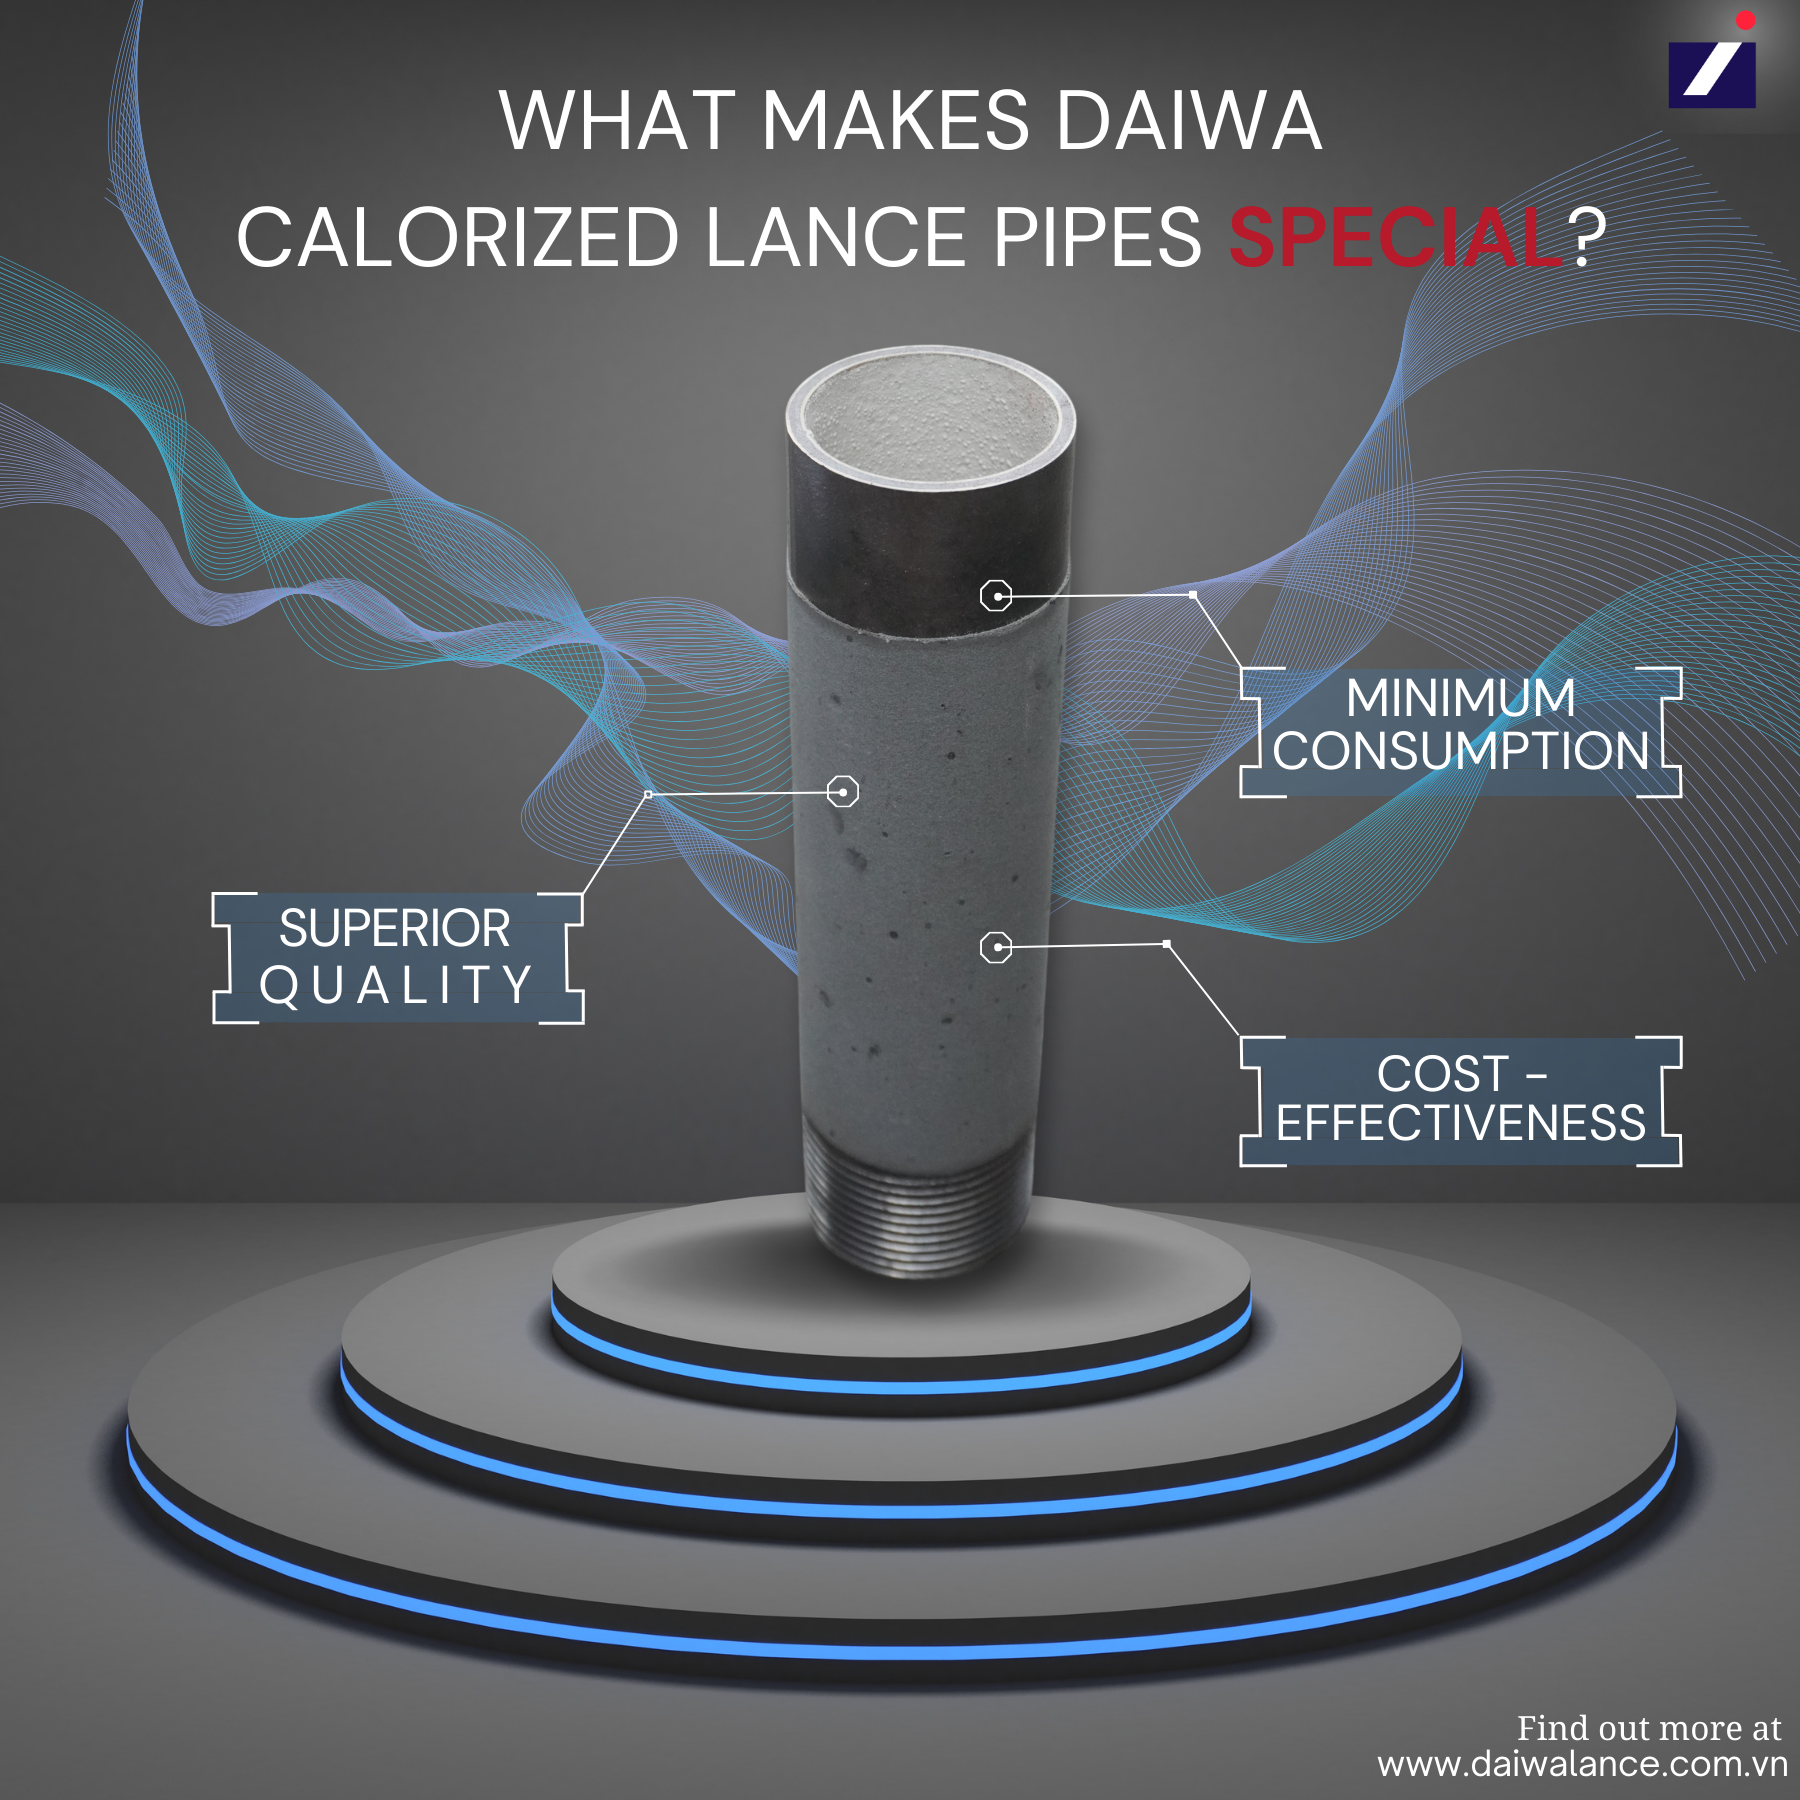 3 Key Features of Daiwa Calorized Lance Pipe